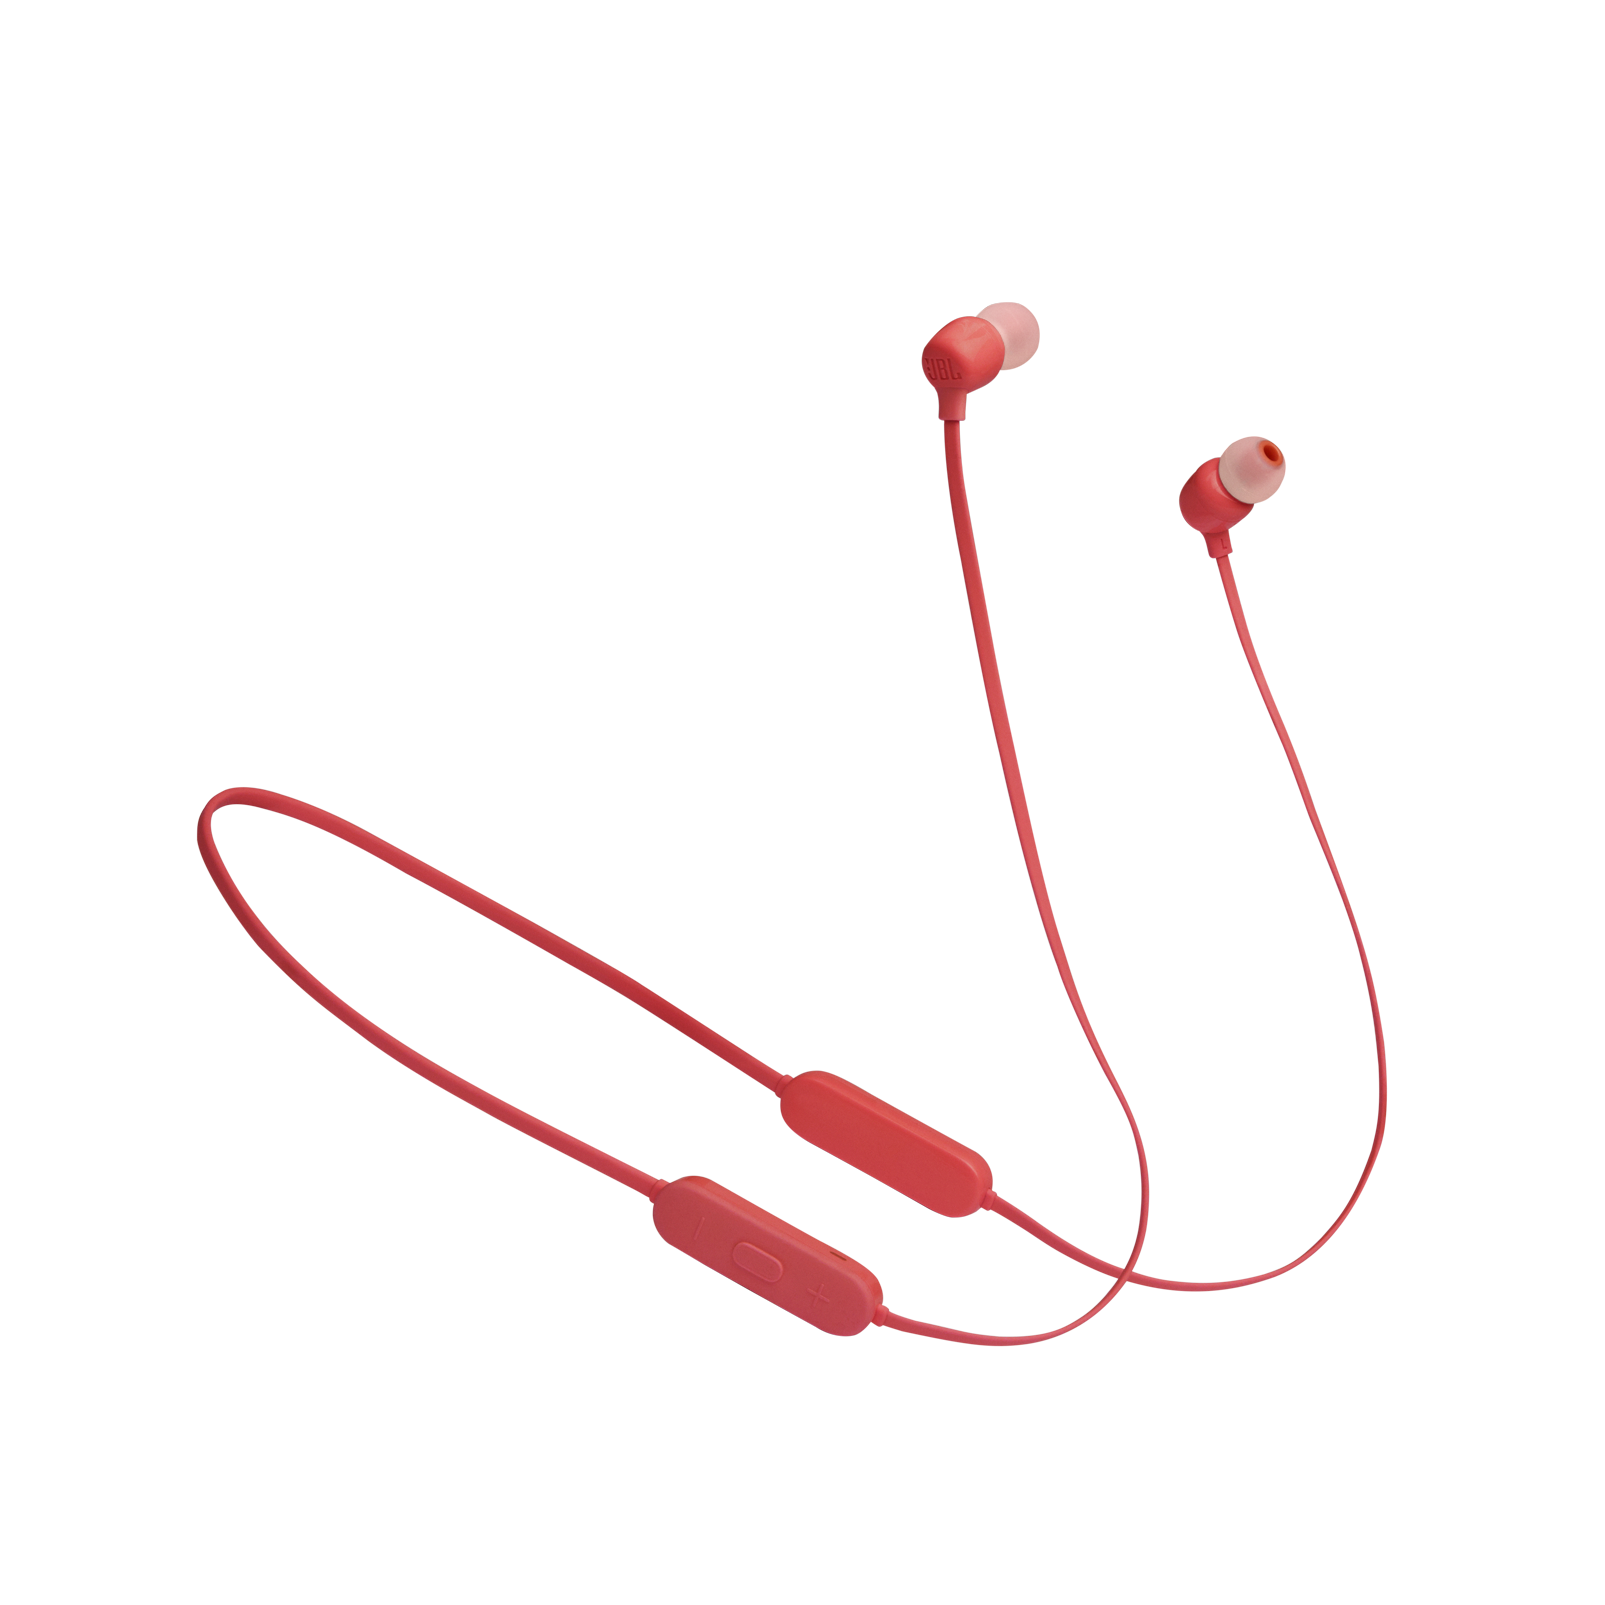 JBL Tune 125BT - Coral Orange - Wireless in-ear headphones - Hero